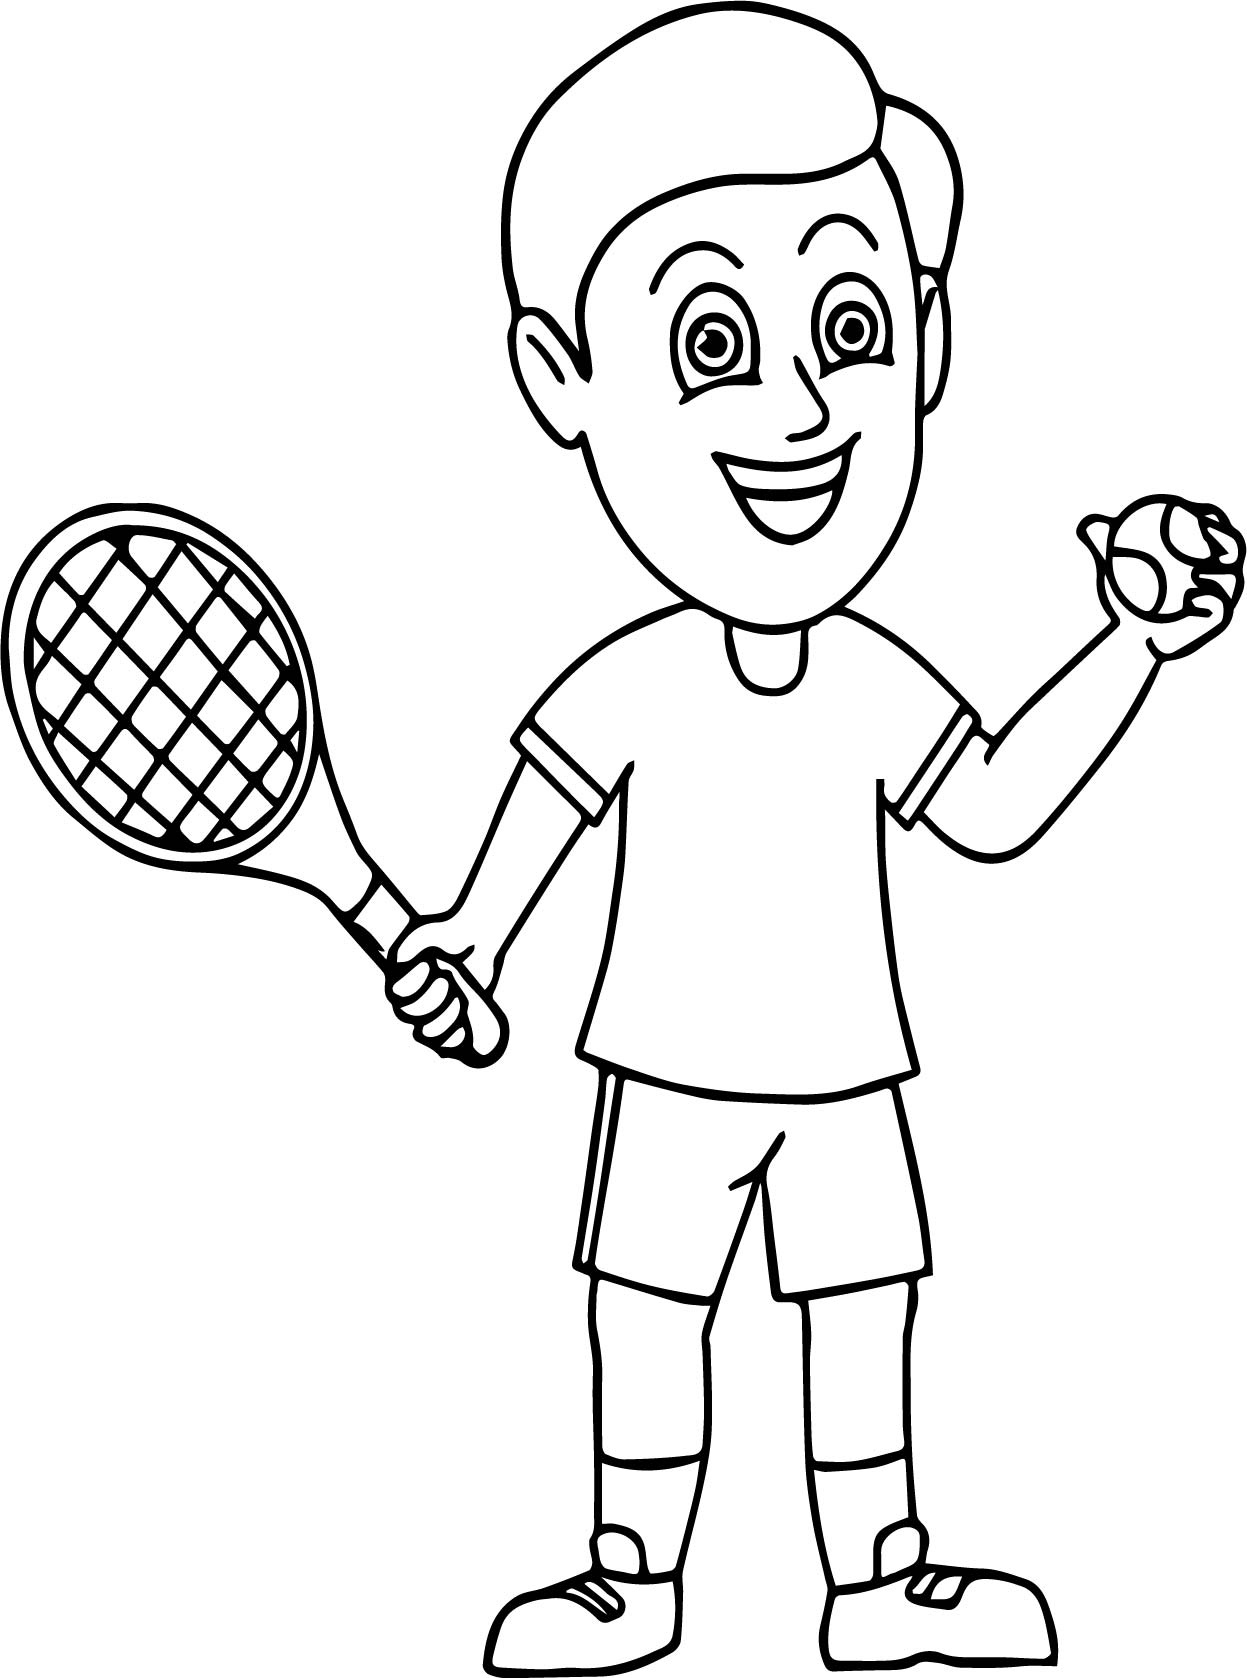 Boy Ready To Serve Tennis